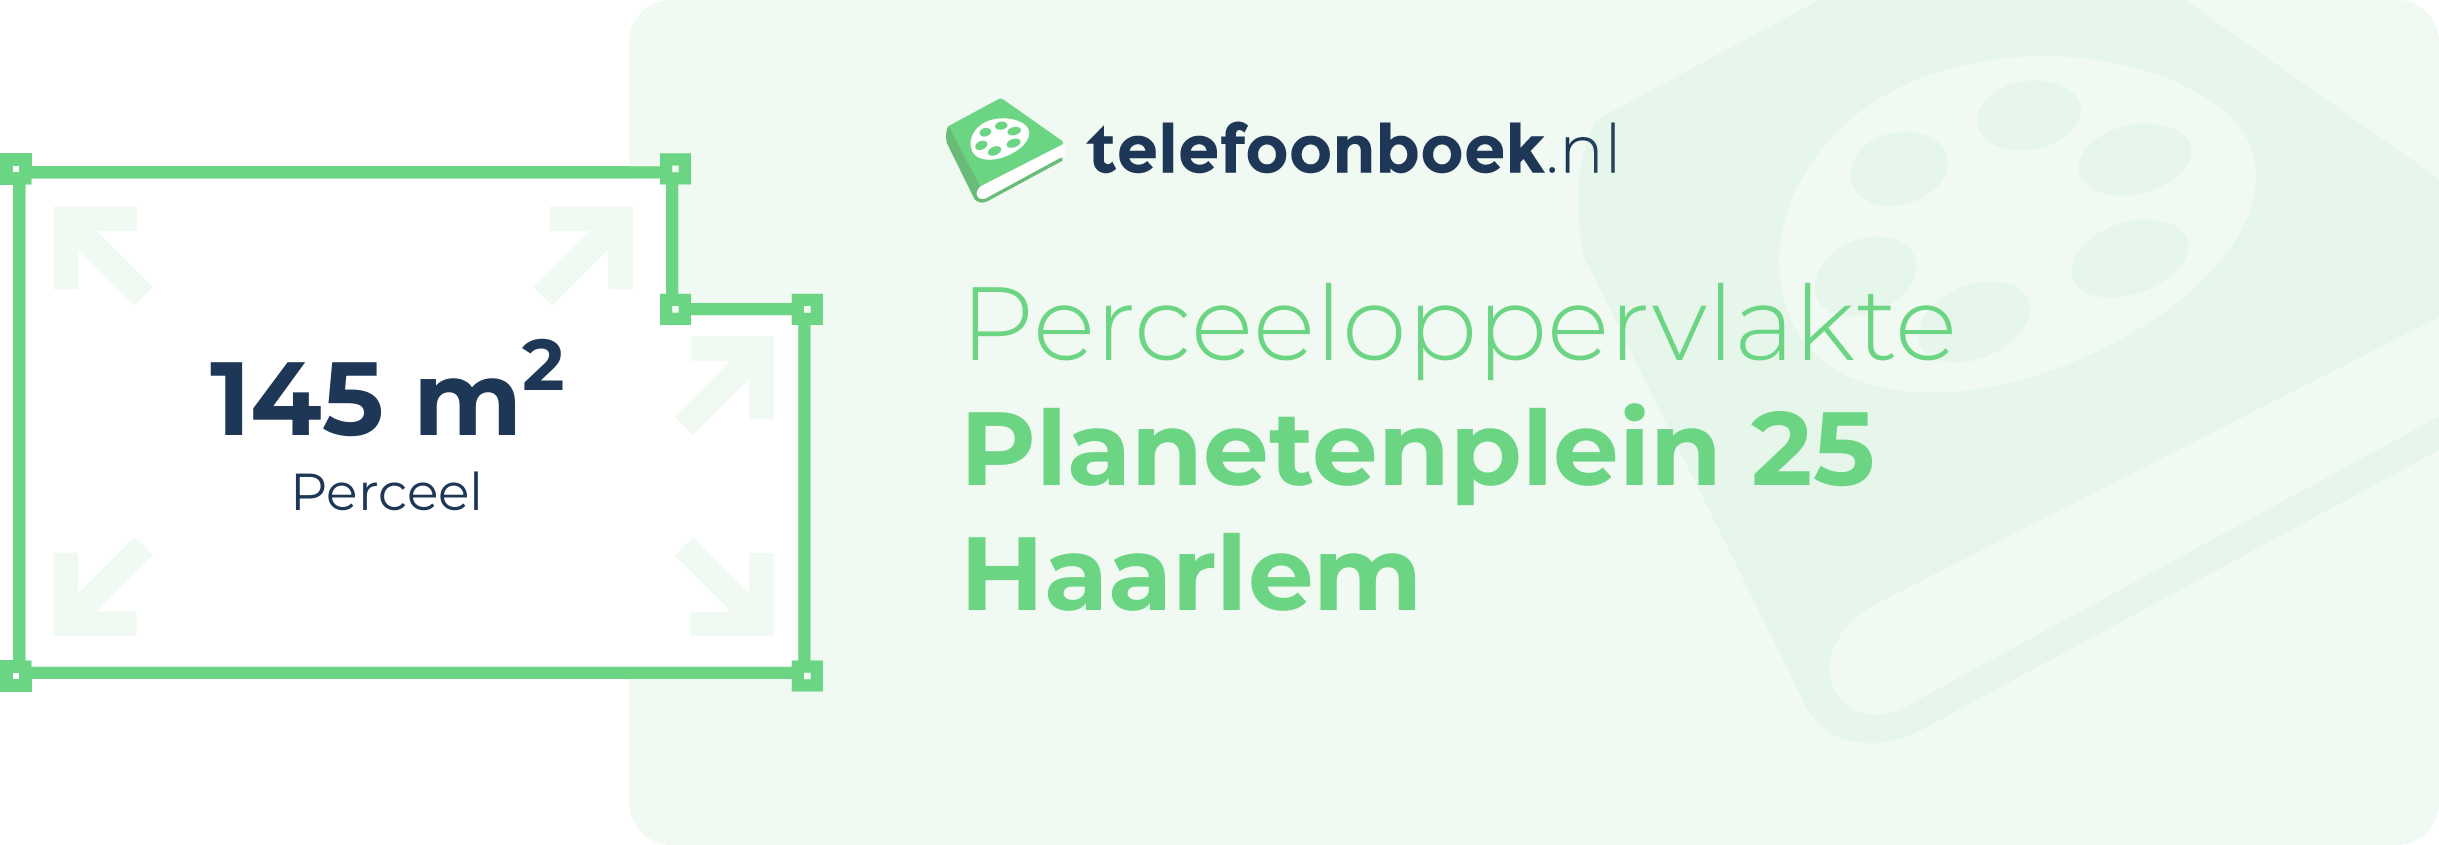 Perceeloppervlakte Planetenplein 25 Haarlem